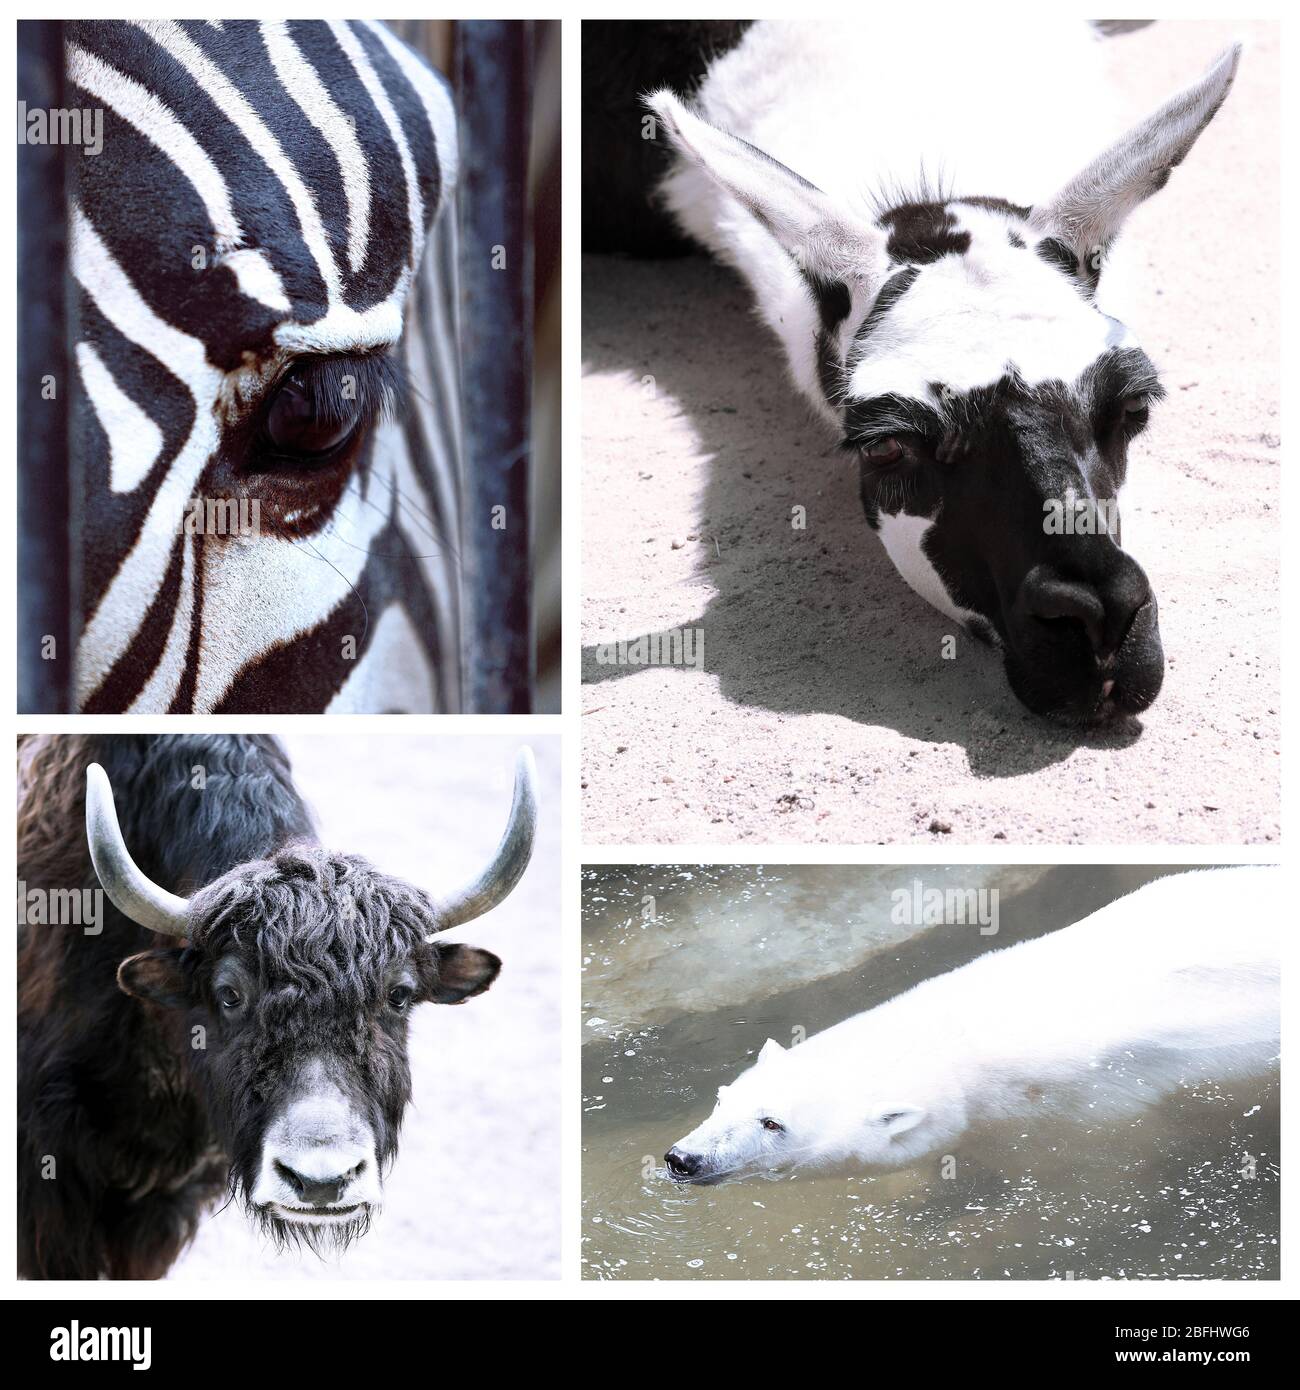 Animals collage Stock Photo